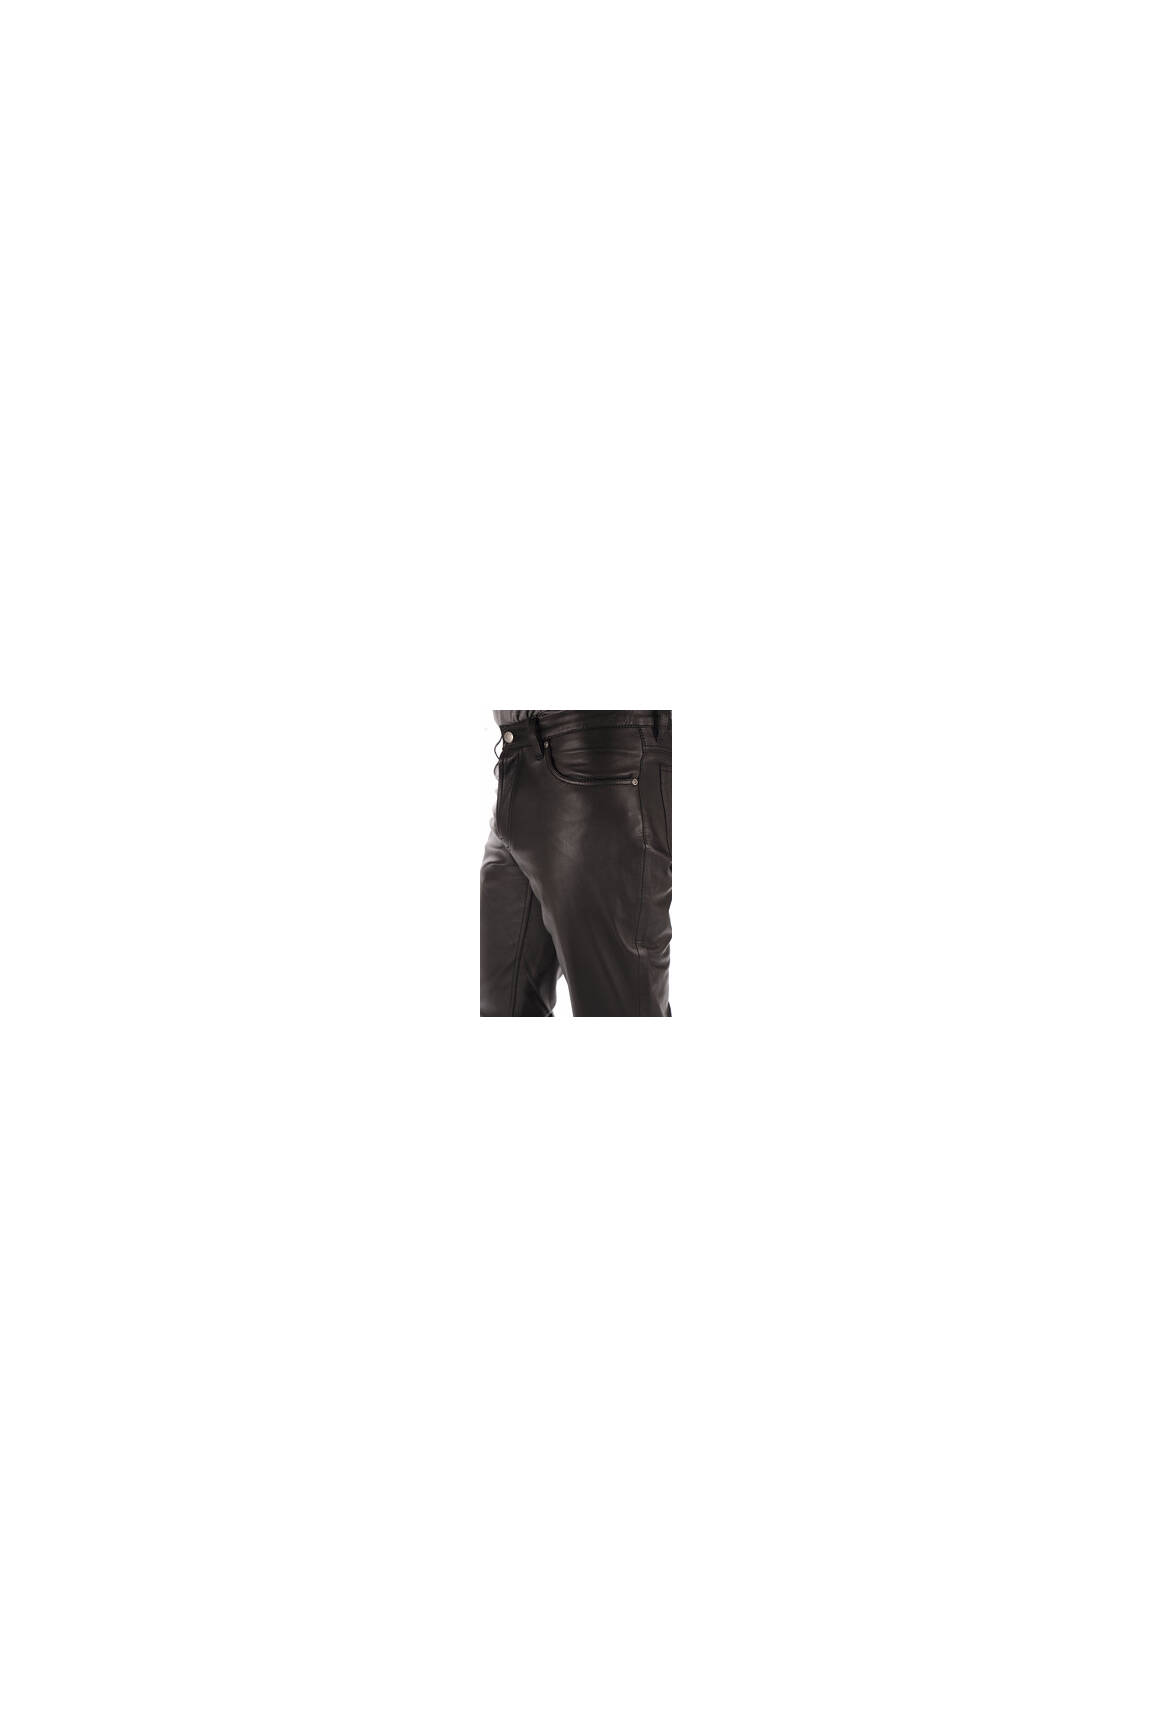 Pantalon Cuir Noir Homme Maddox - La Canadienne - Pantalons / shorts Cuir  Noir